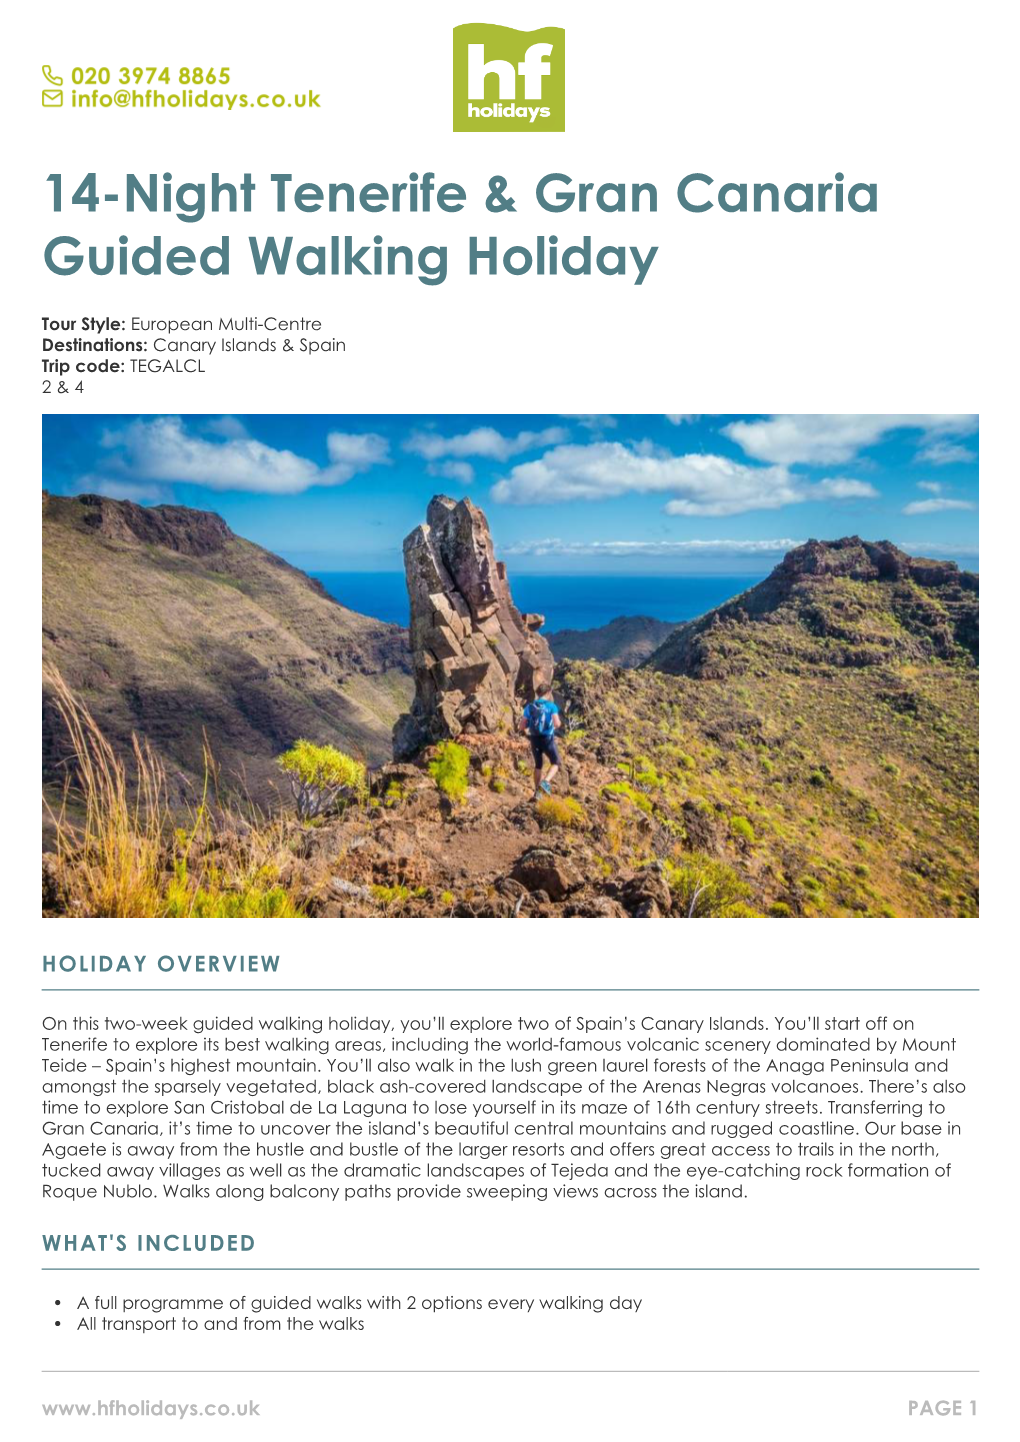 14-Night Tenerife & Gran Canaria Guided Walking Holiday